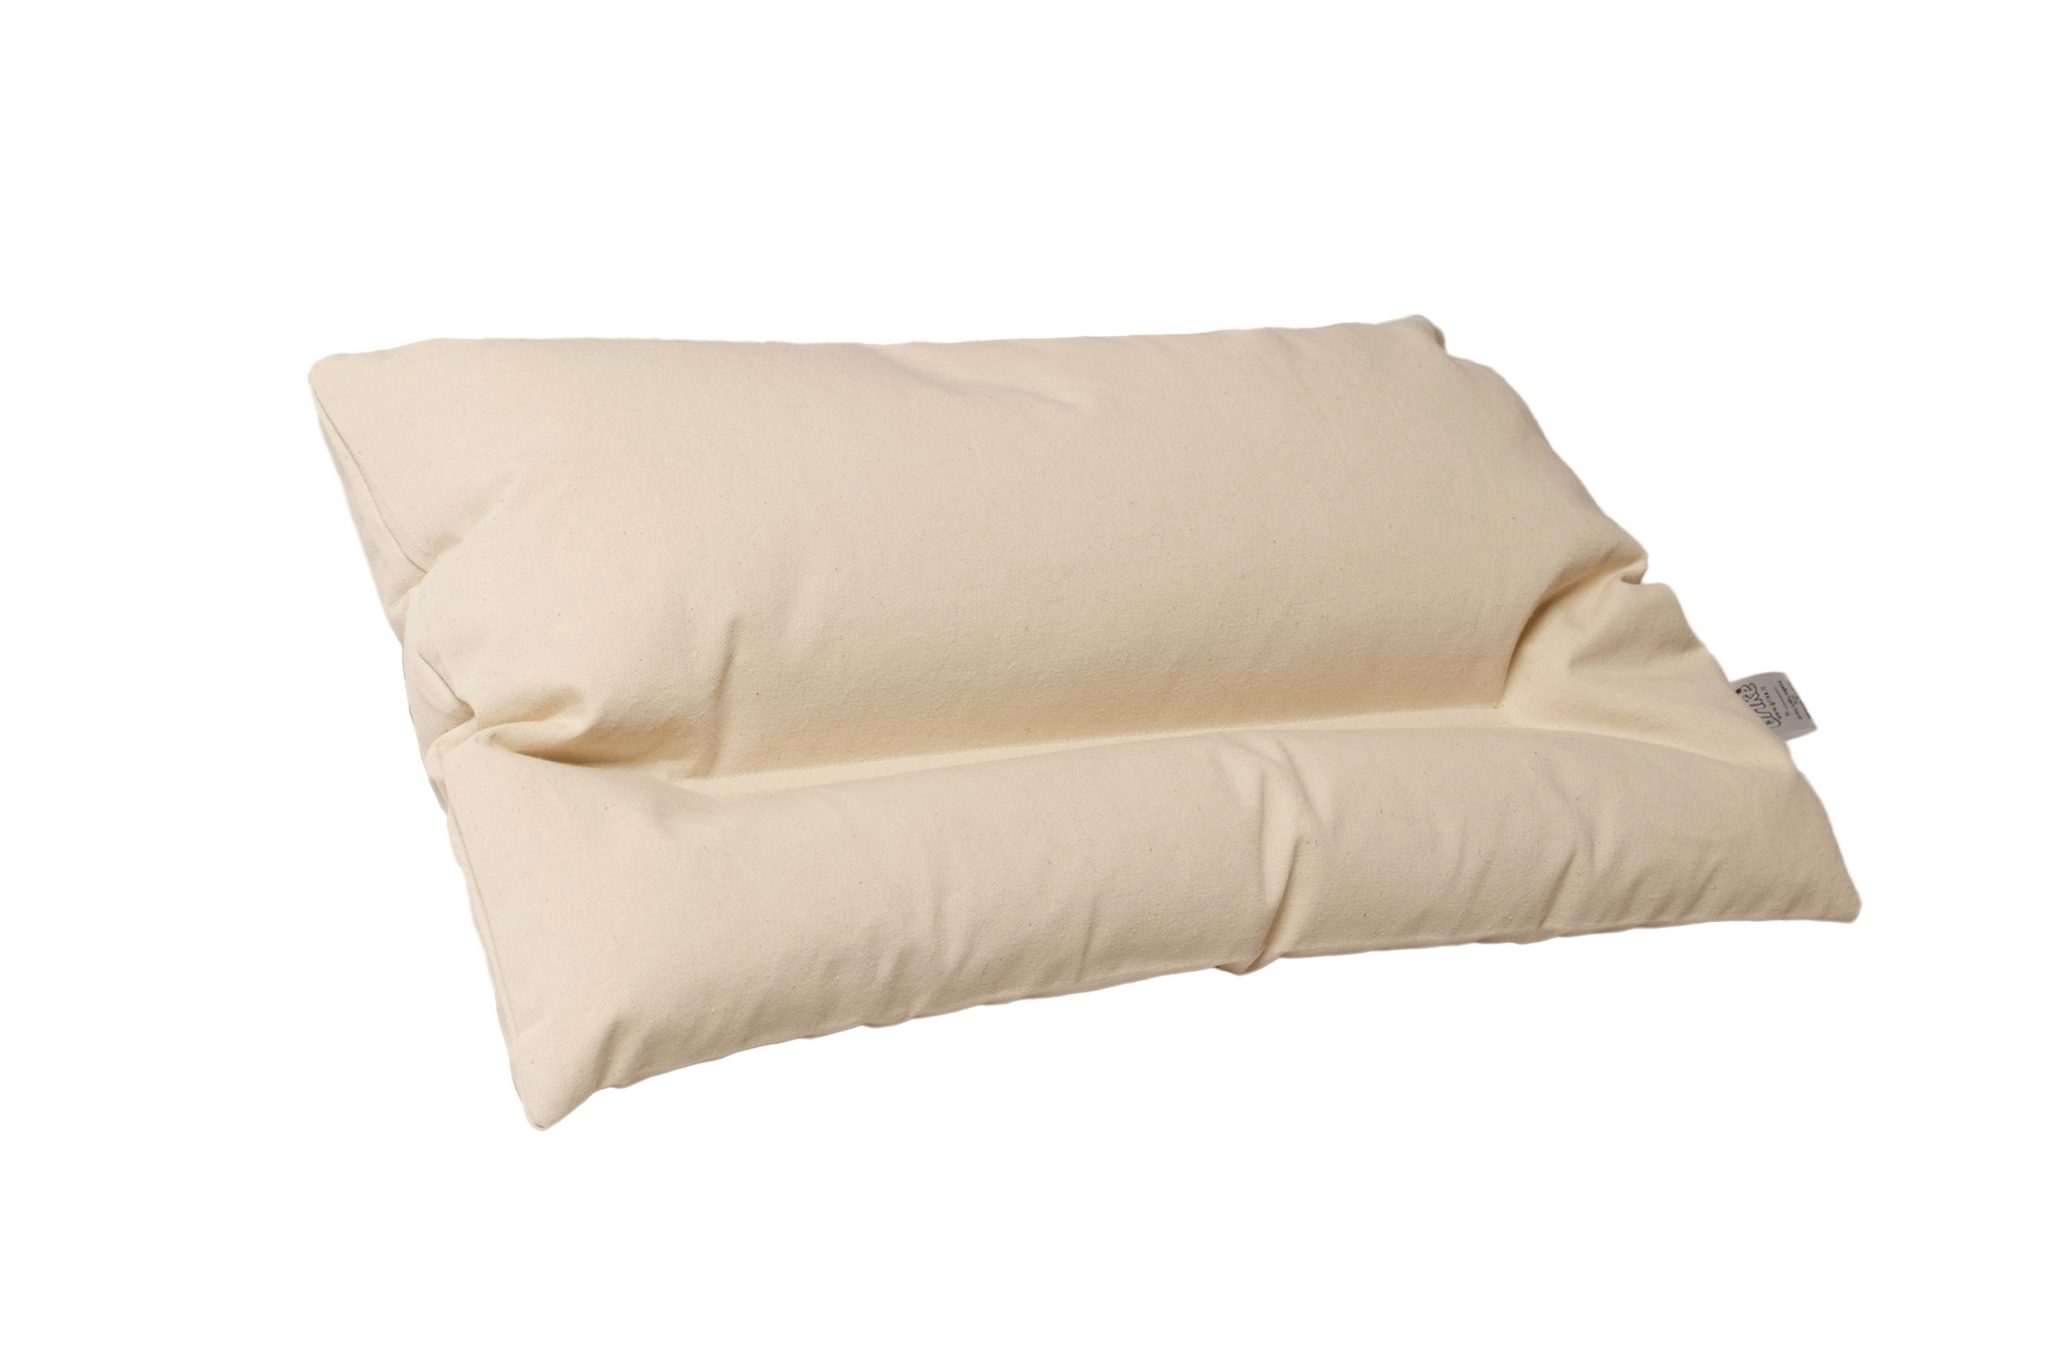 buckwheat hull pillow